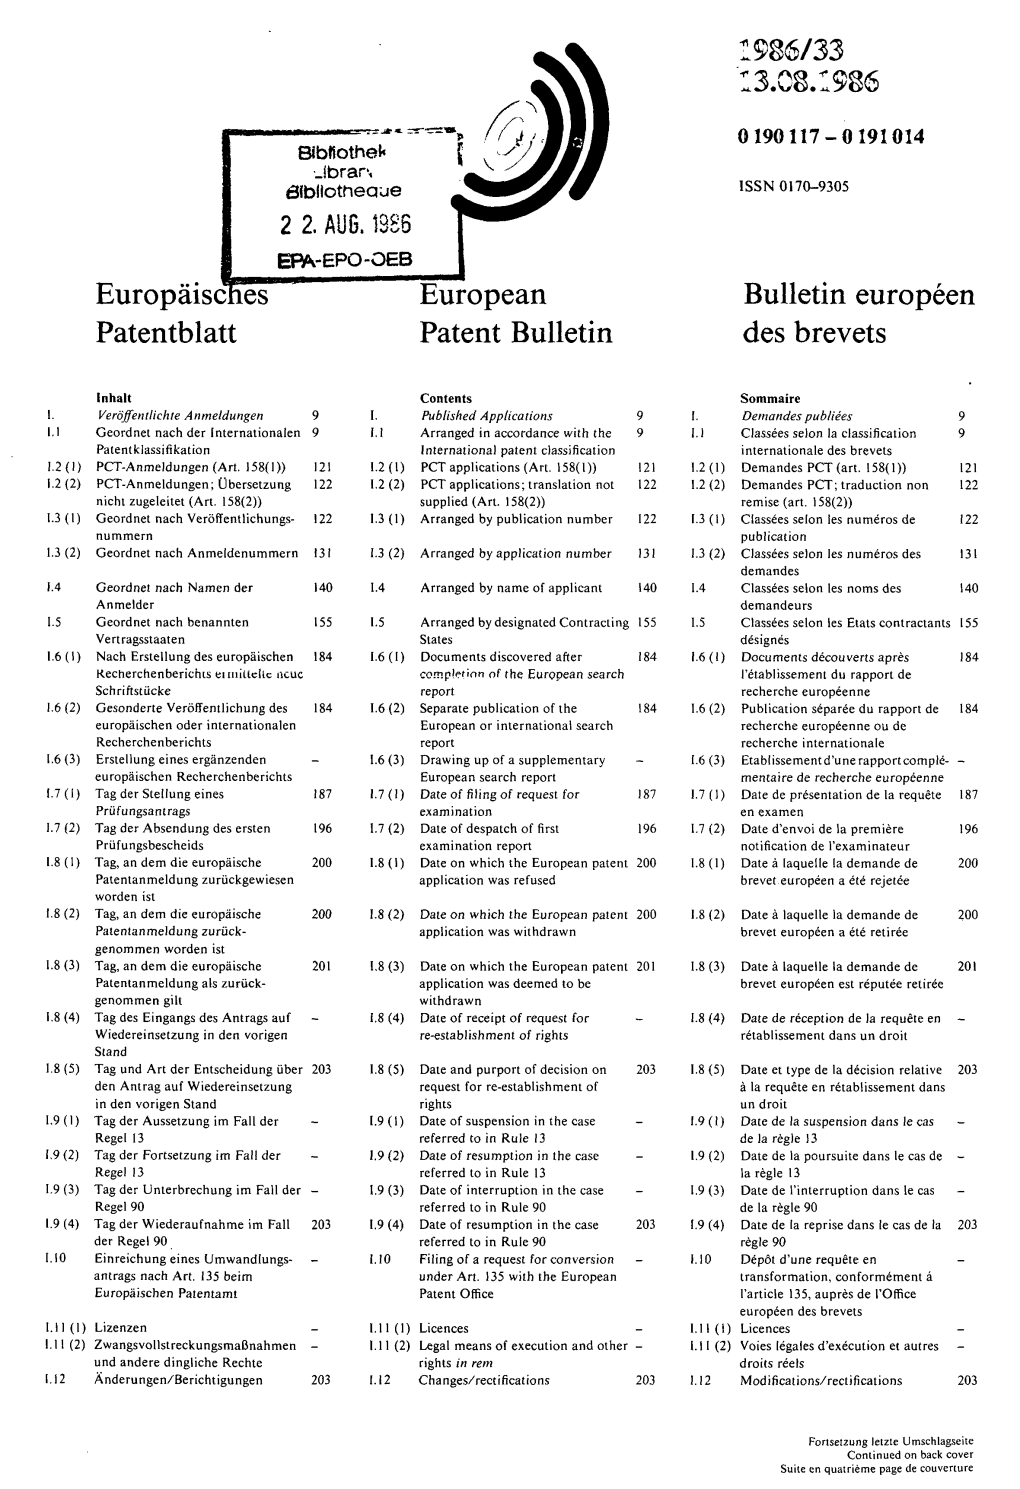 European Patent Bulletin 1986/33